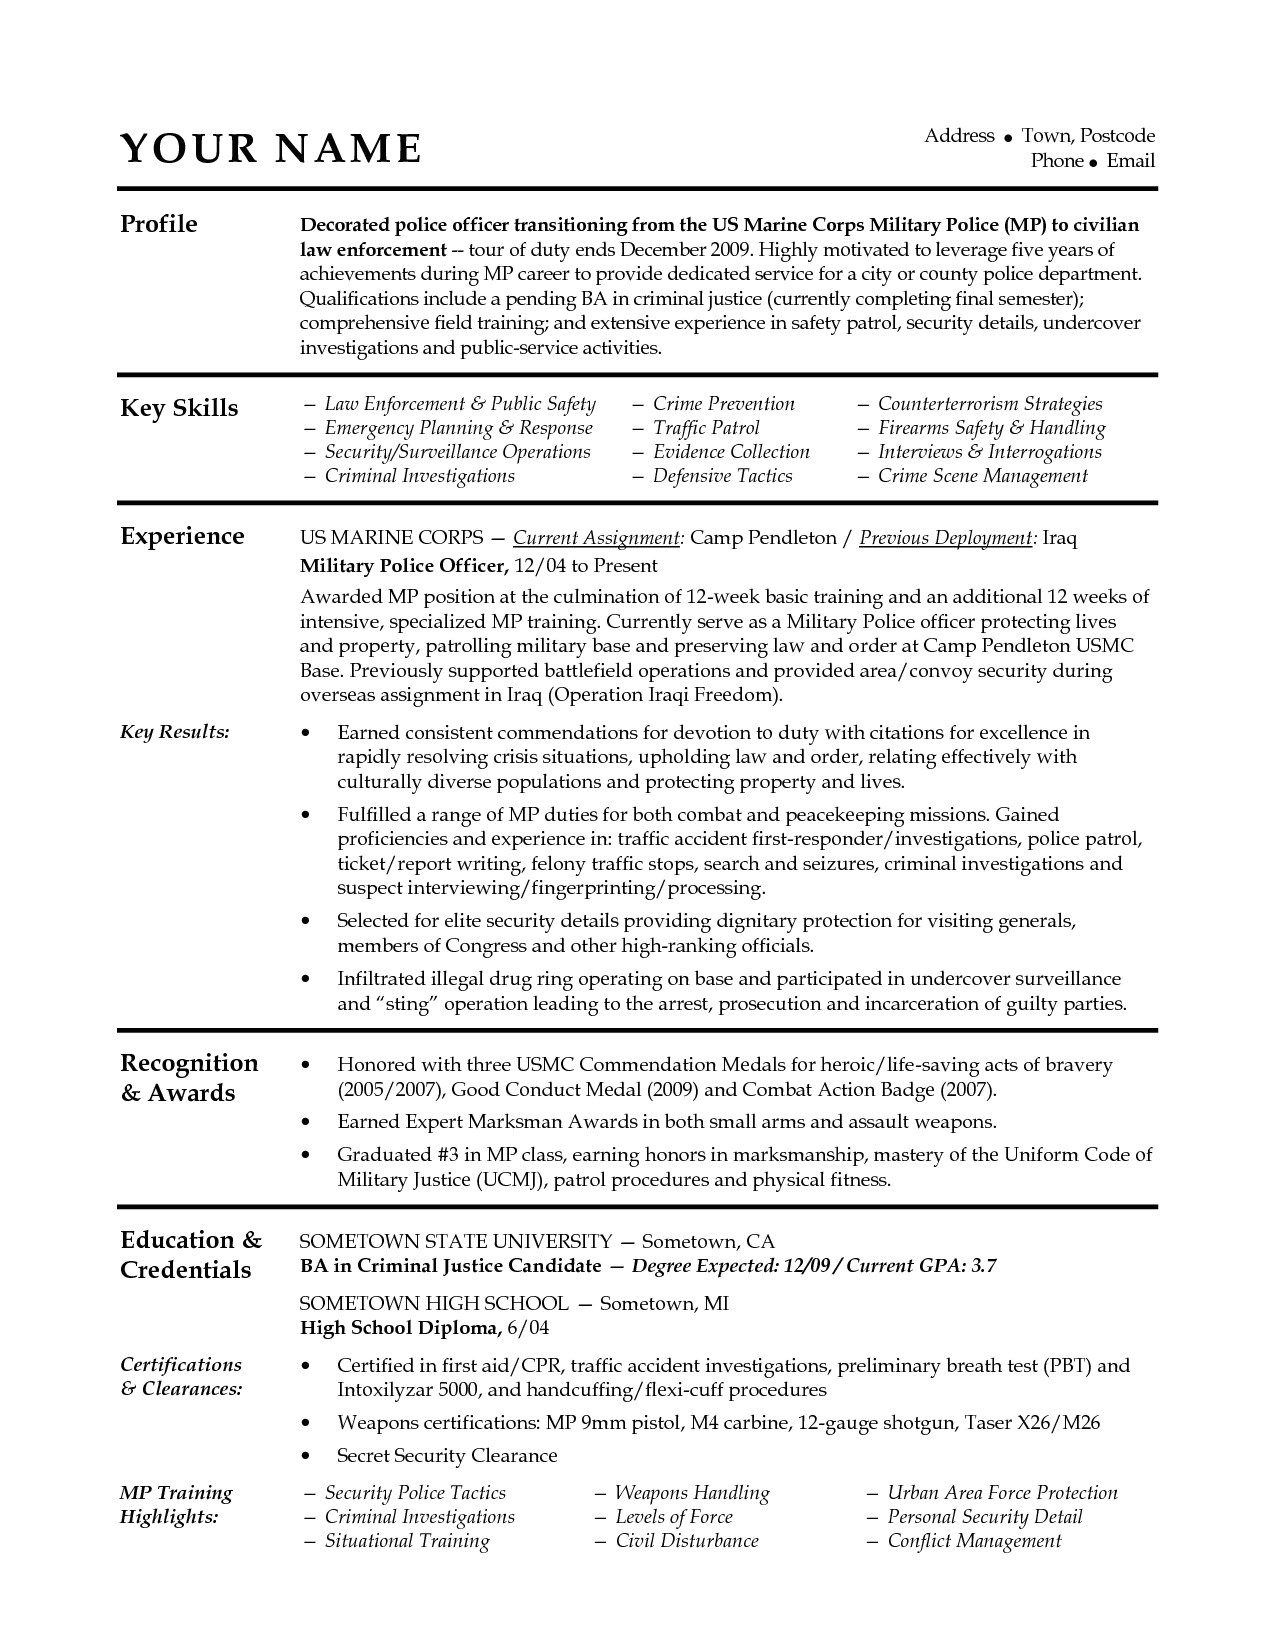 describe your computer skills resume sample resume words to describe puter skills college admission resume sample write your resume